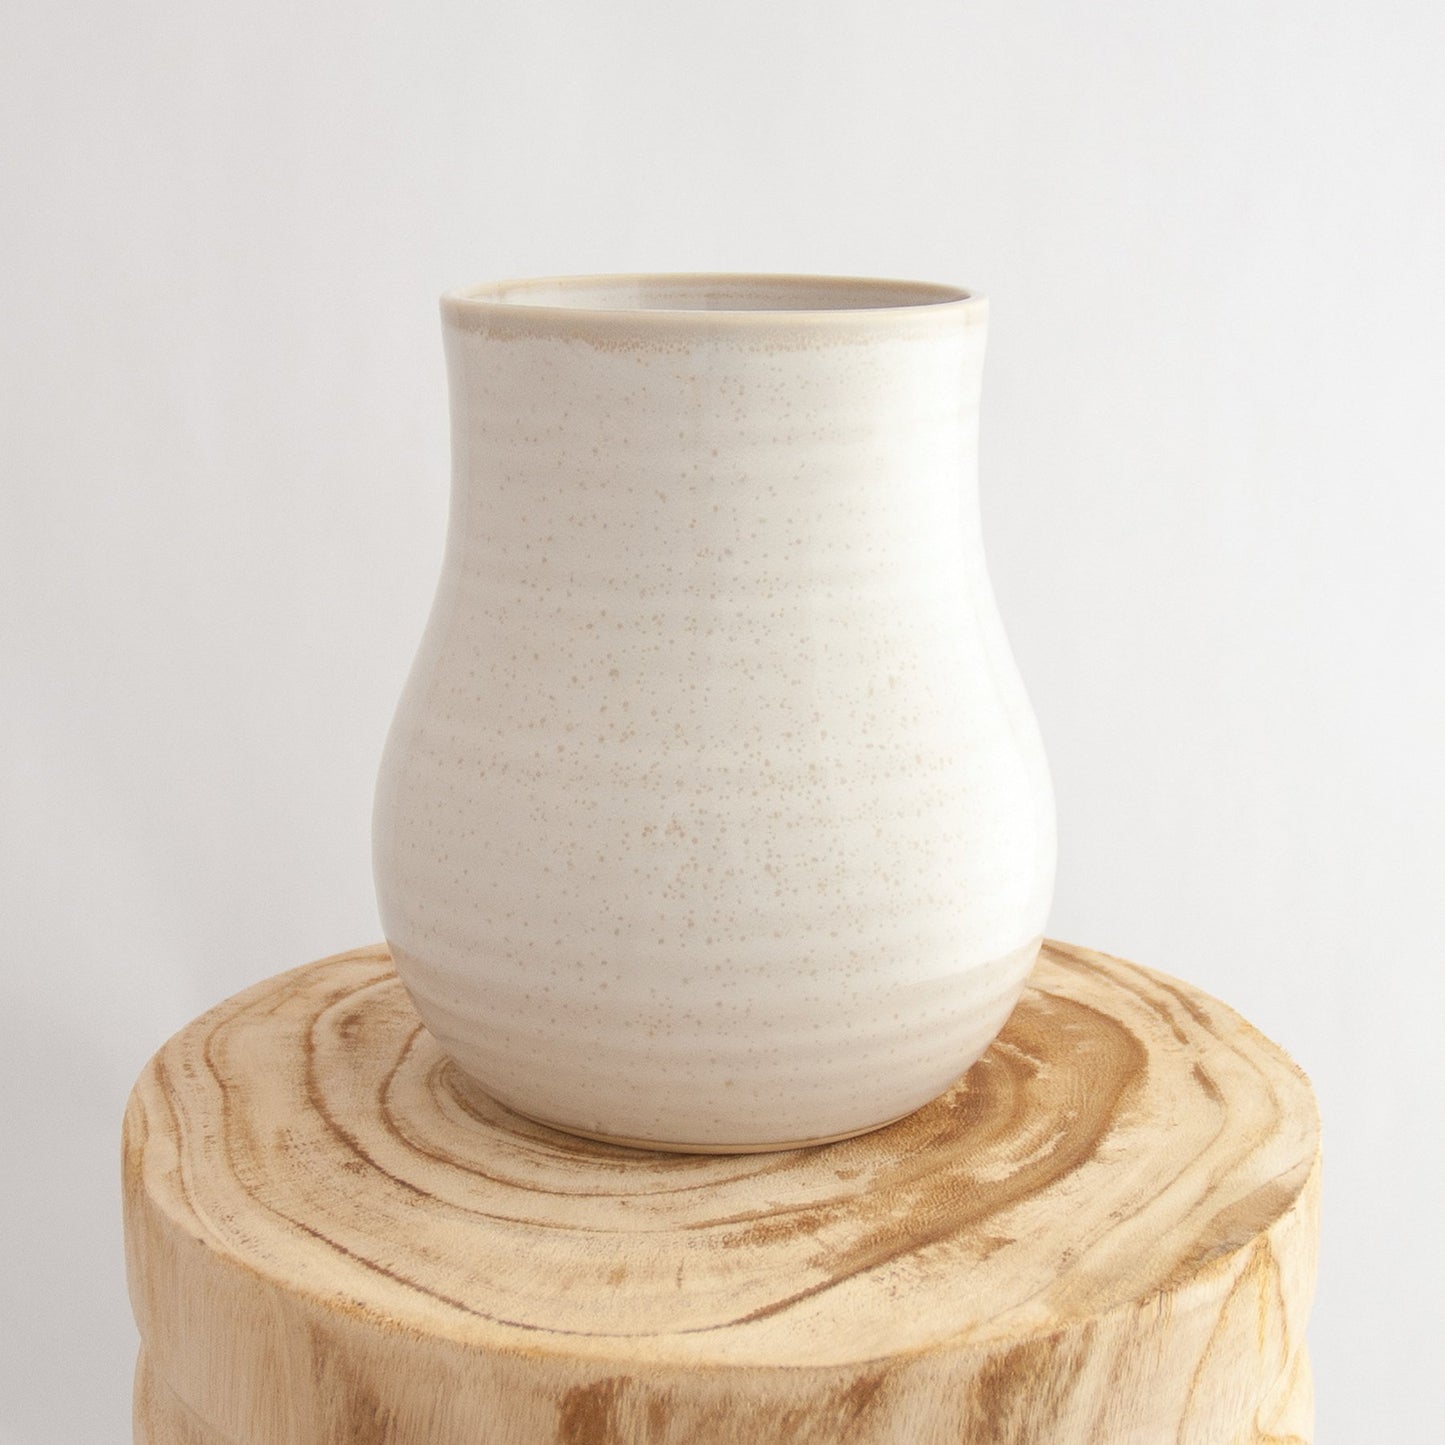 Robert Gordon pottery botanica coast white vase sitting on a natural wooden round side table